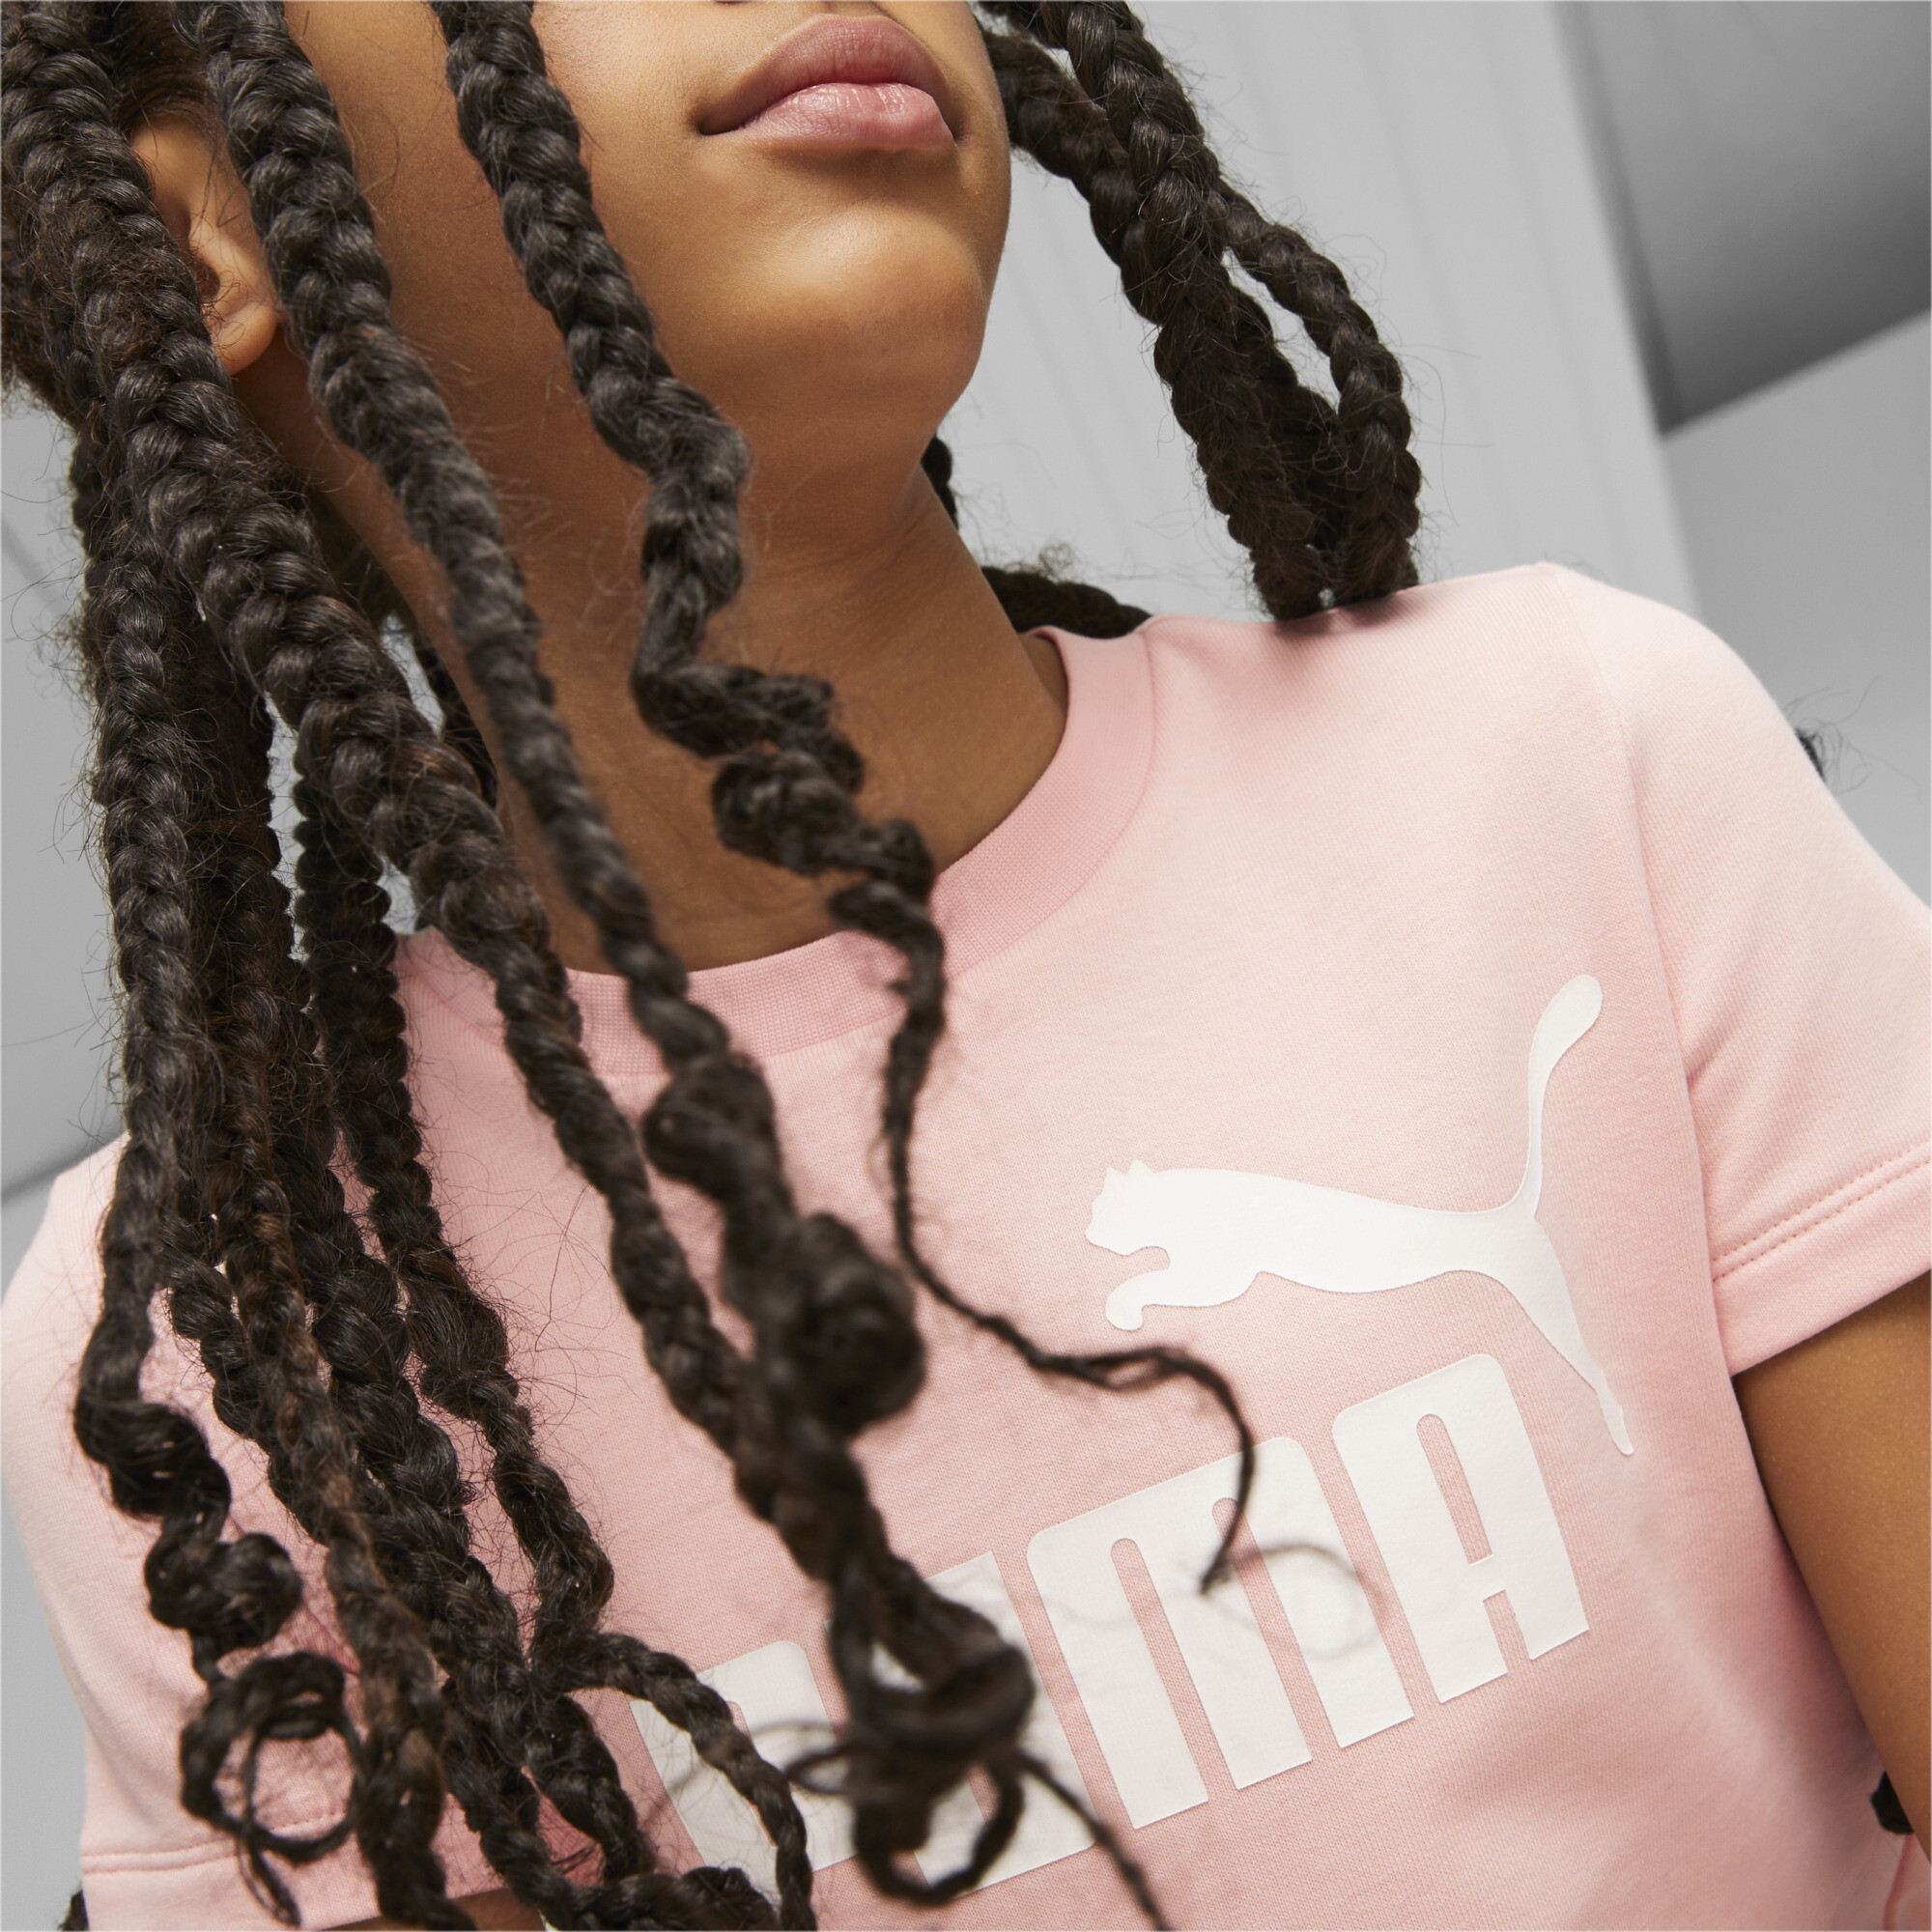 Women's Puma Essentials+ Logo Dress Youth, Pink, Size 1-2Y, Clothing